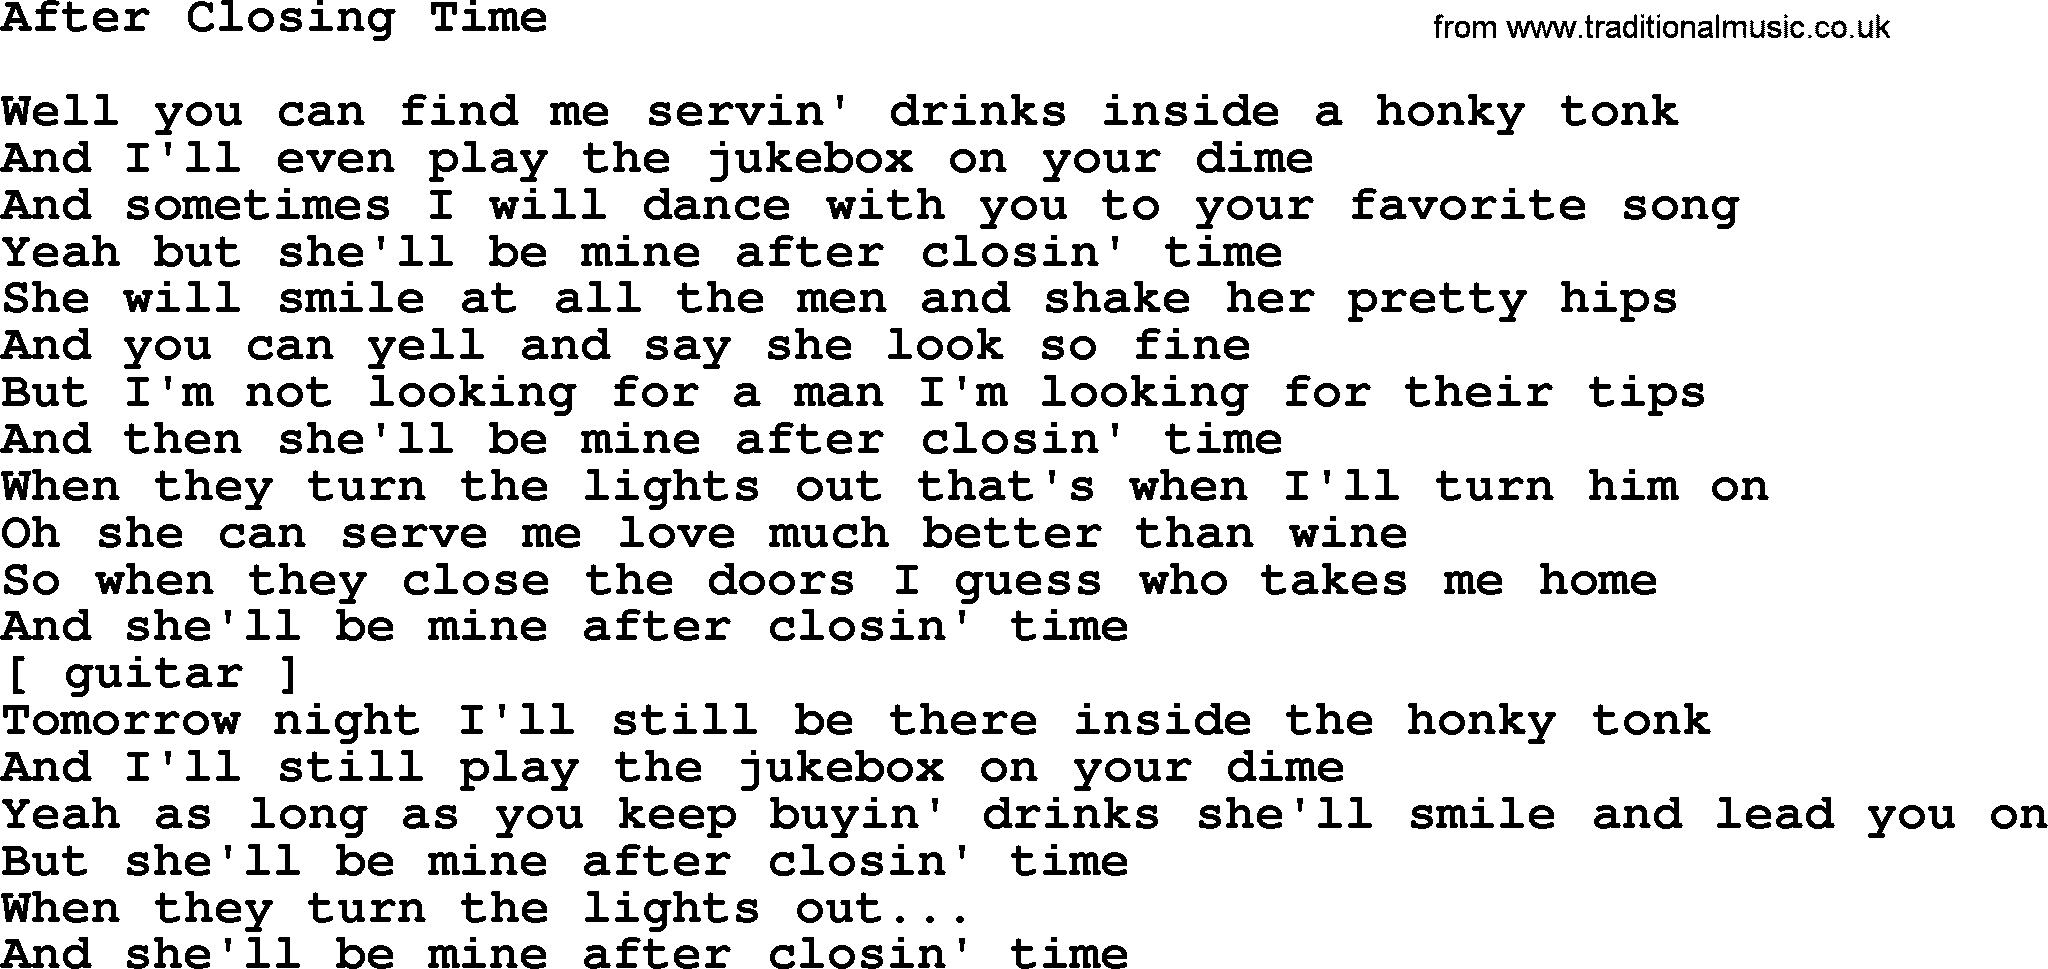 George Jones song: After Closing Time, lyrics